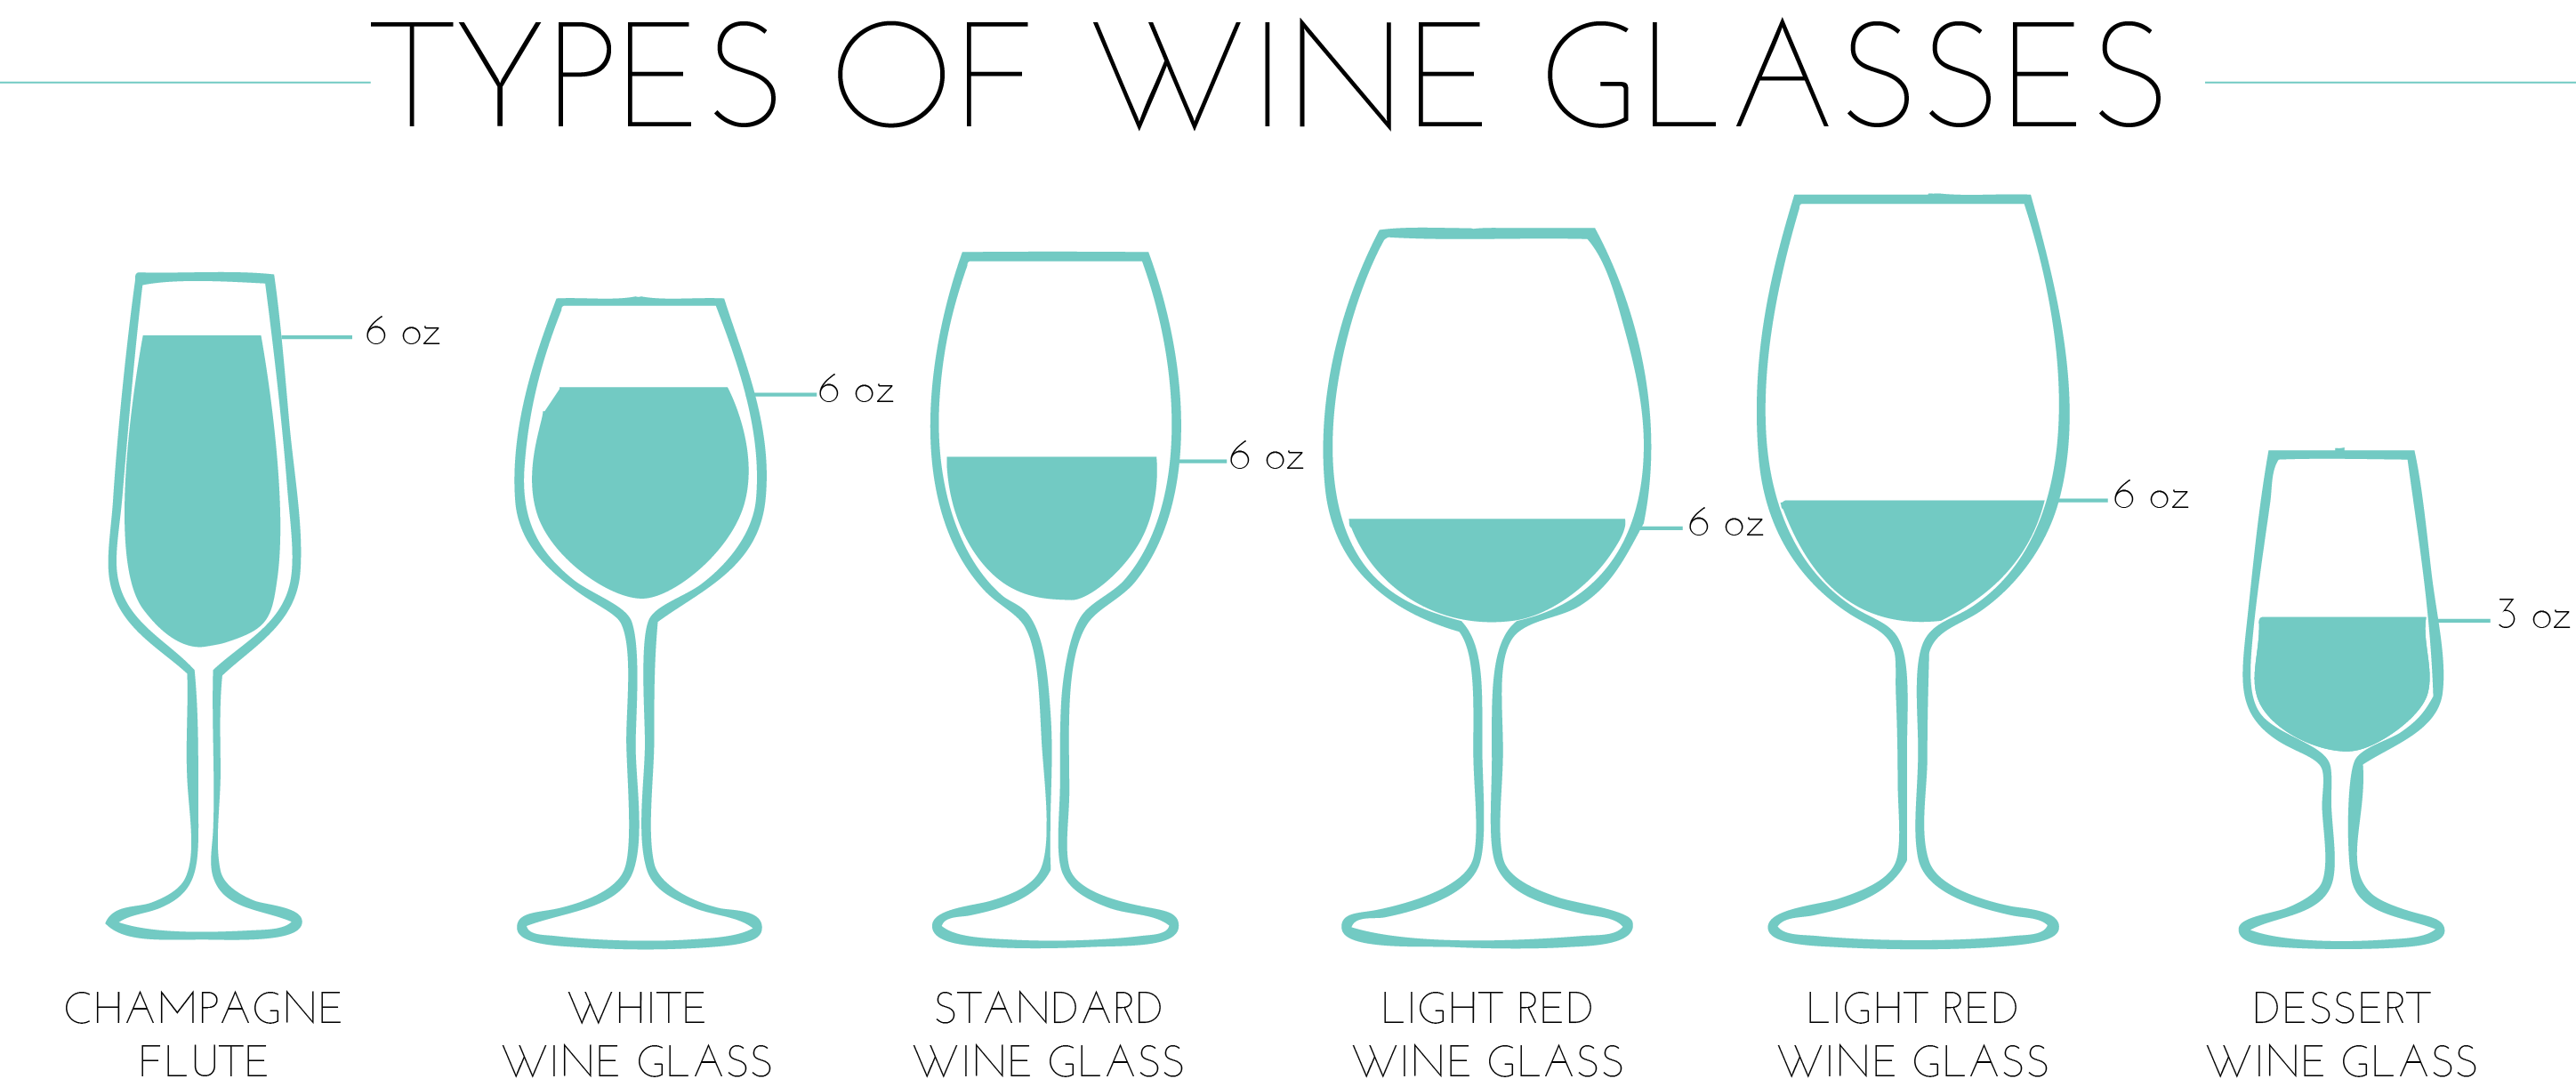 https://yourglassormine.files.wordpress.com/2015/01/types-of-wine-glasses.png